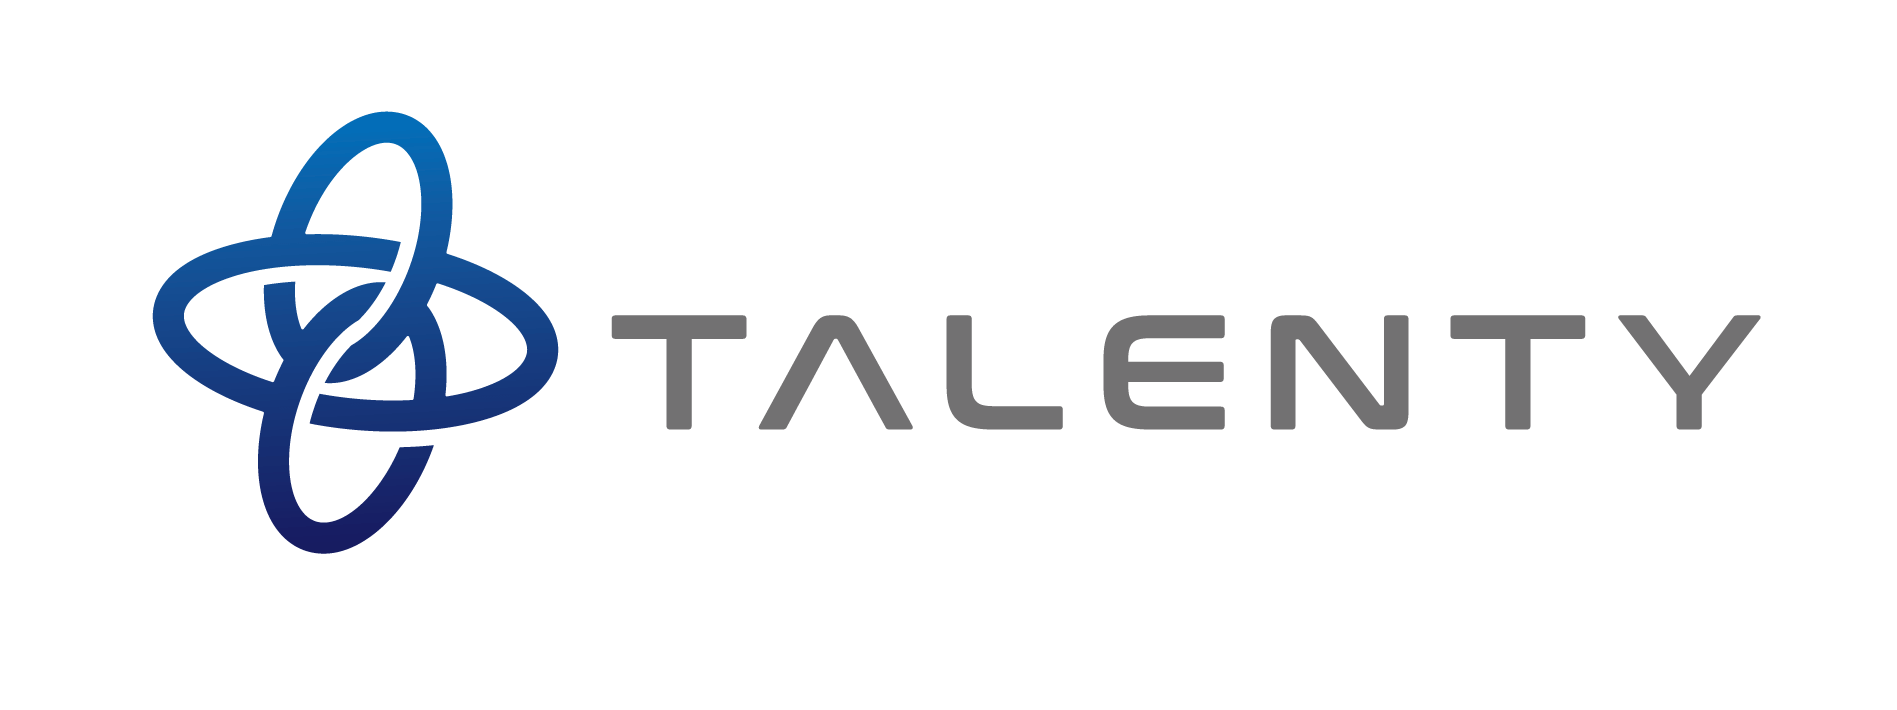 Talenty合同会社 - Talenty Co., Ltd.｜デジタルマーケティングカンパニー